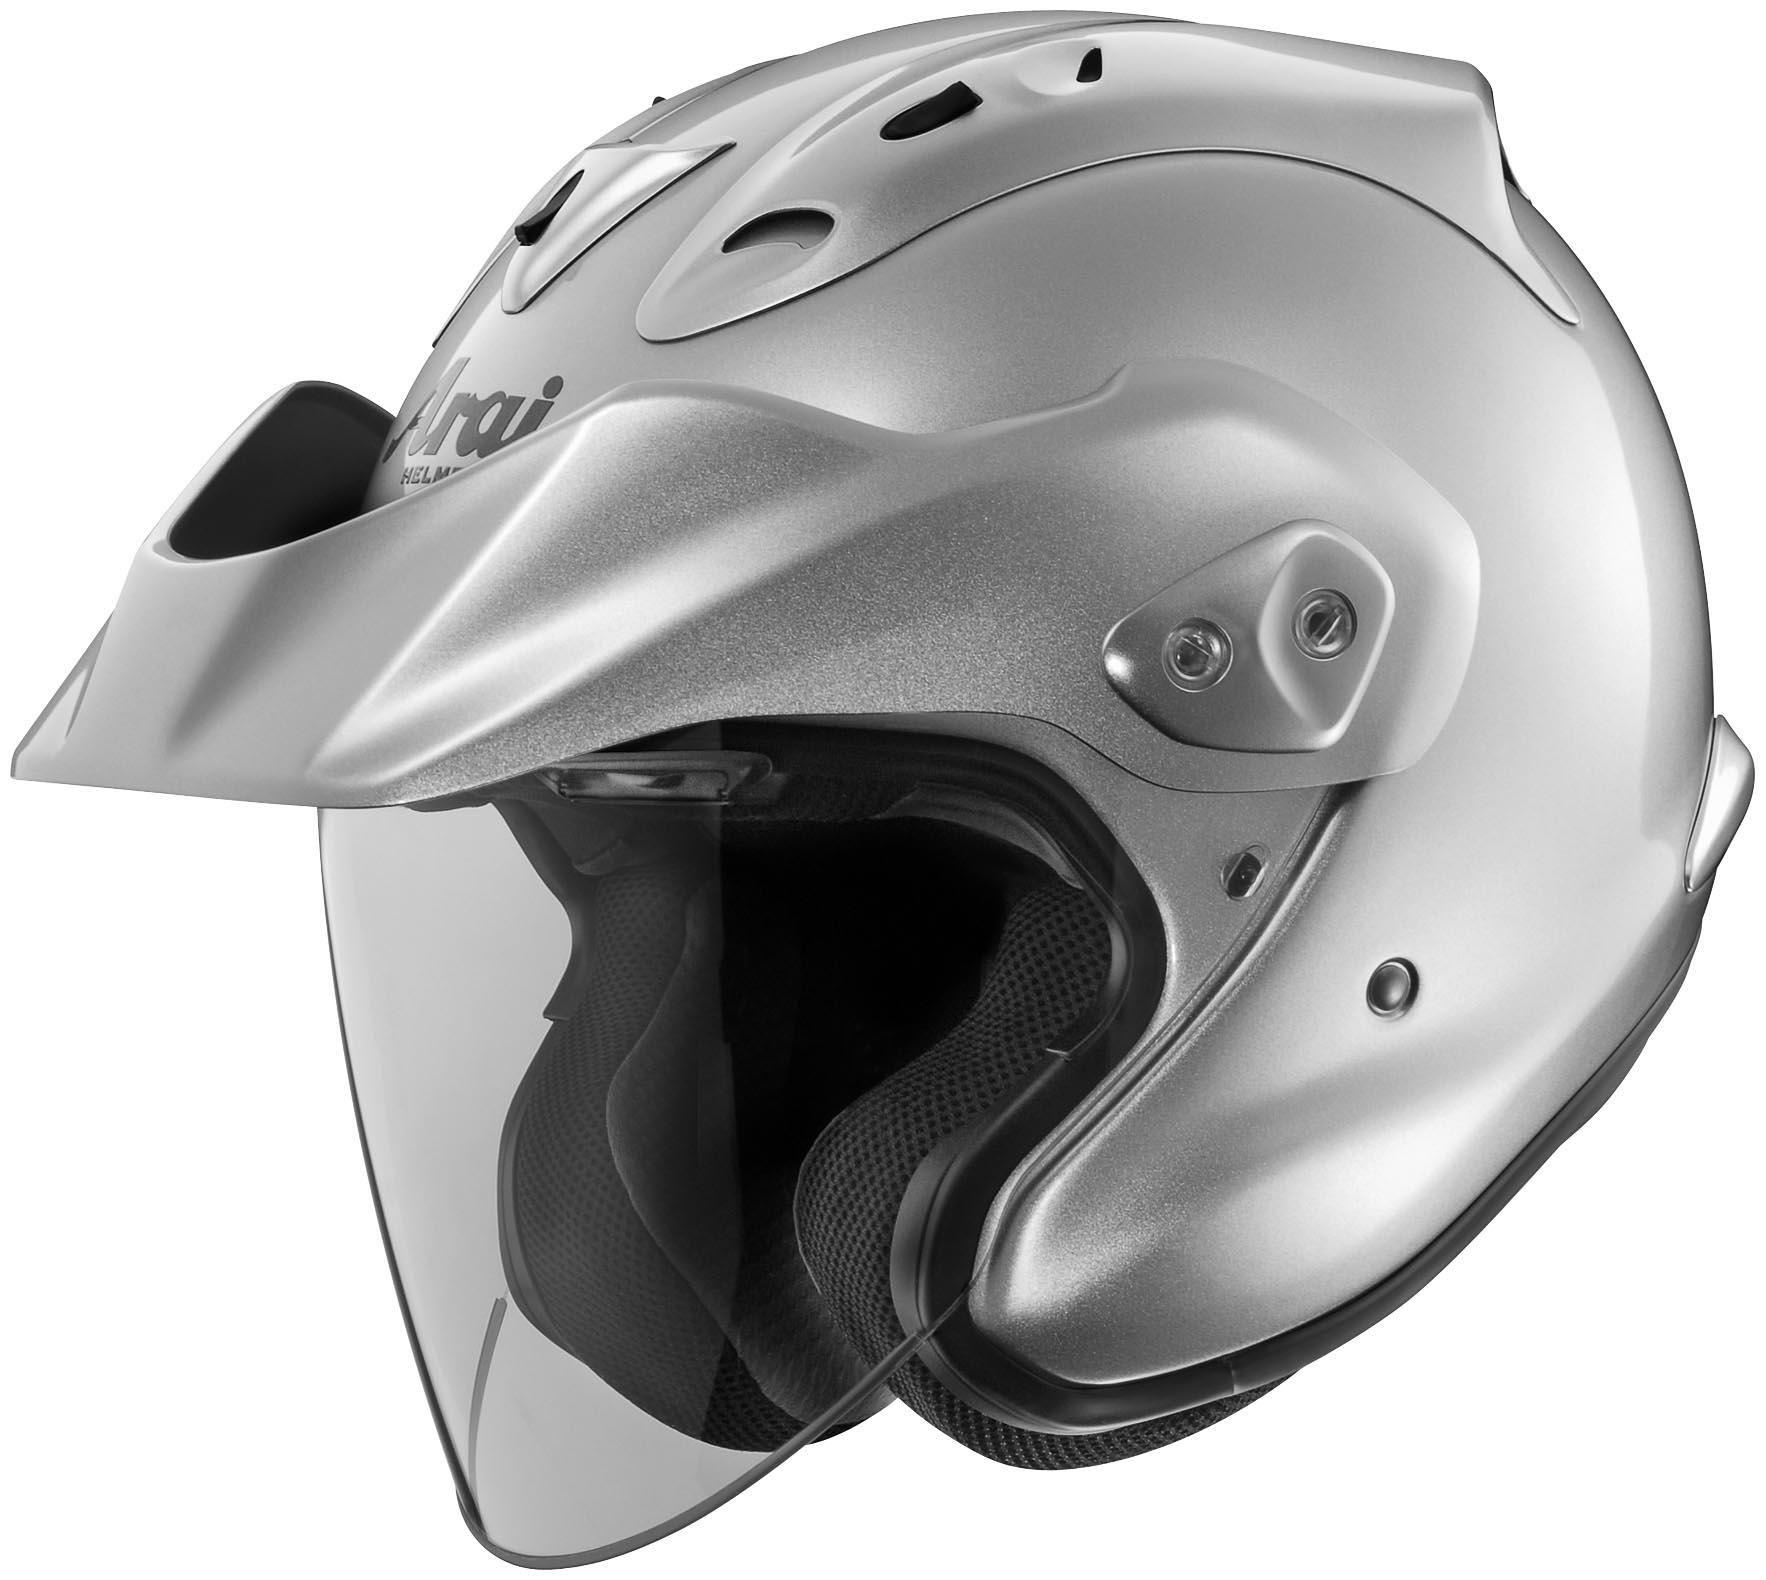 Arai ct-z solid motorcycle racing performance dot half-face helmet brand new